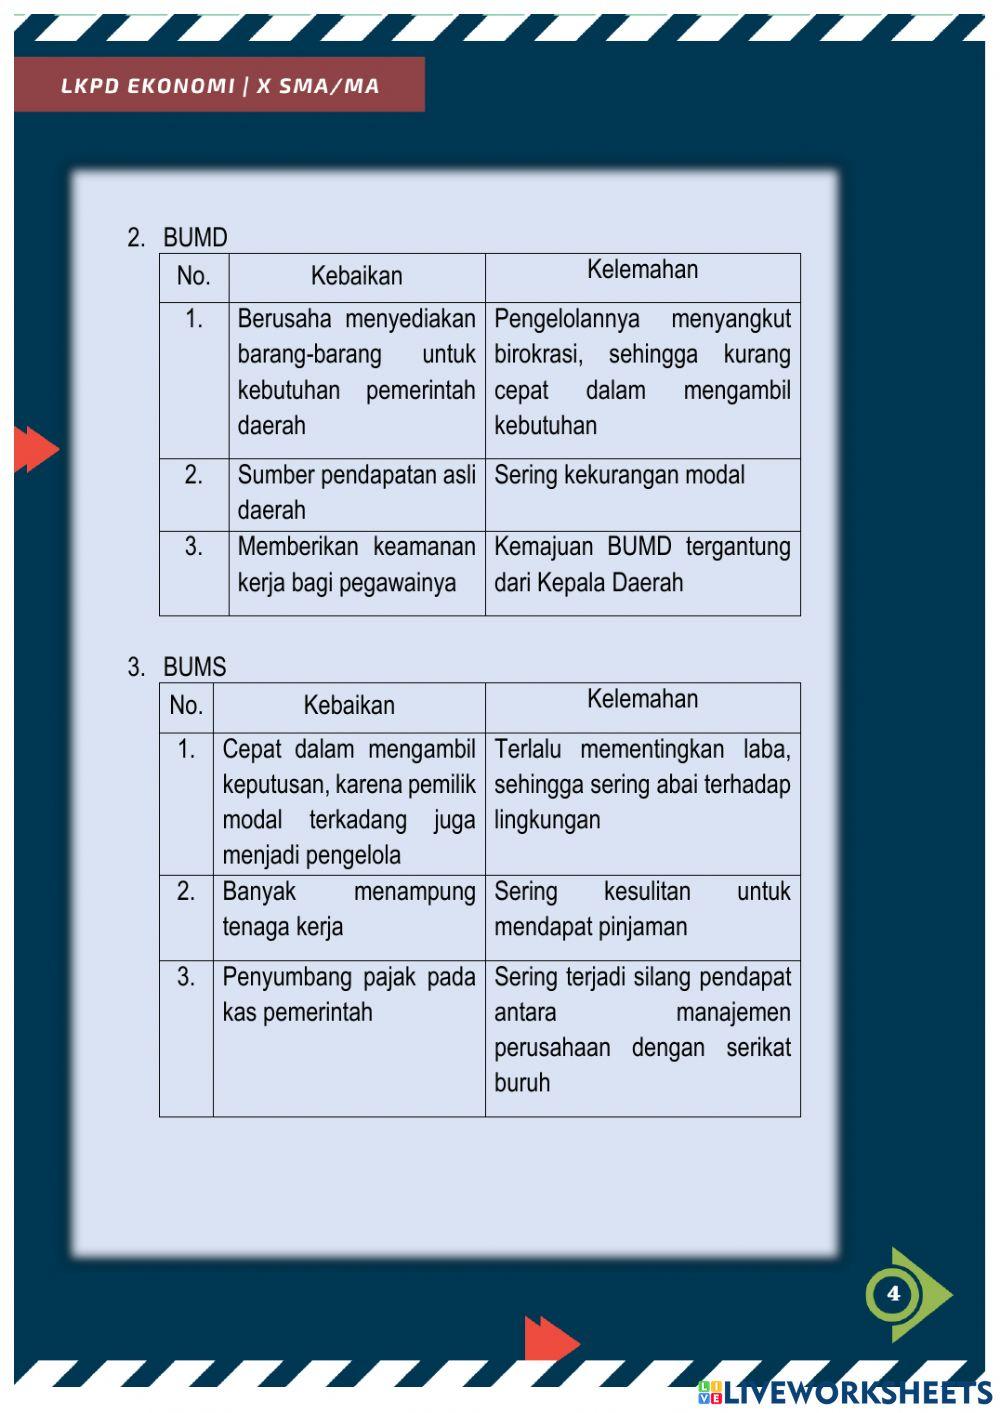 LKPD Elektronik-Badan Usaha Dalam Perekonomian Indonesia-X-Ekonomi